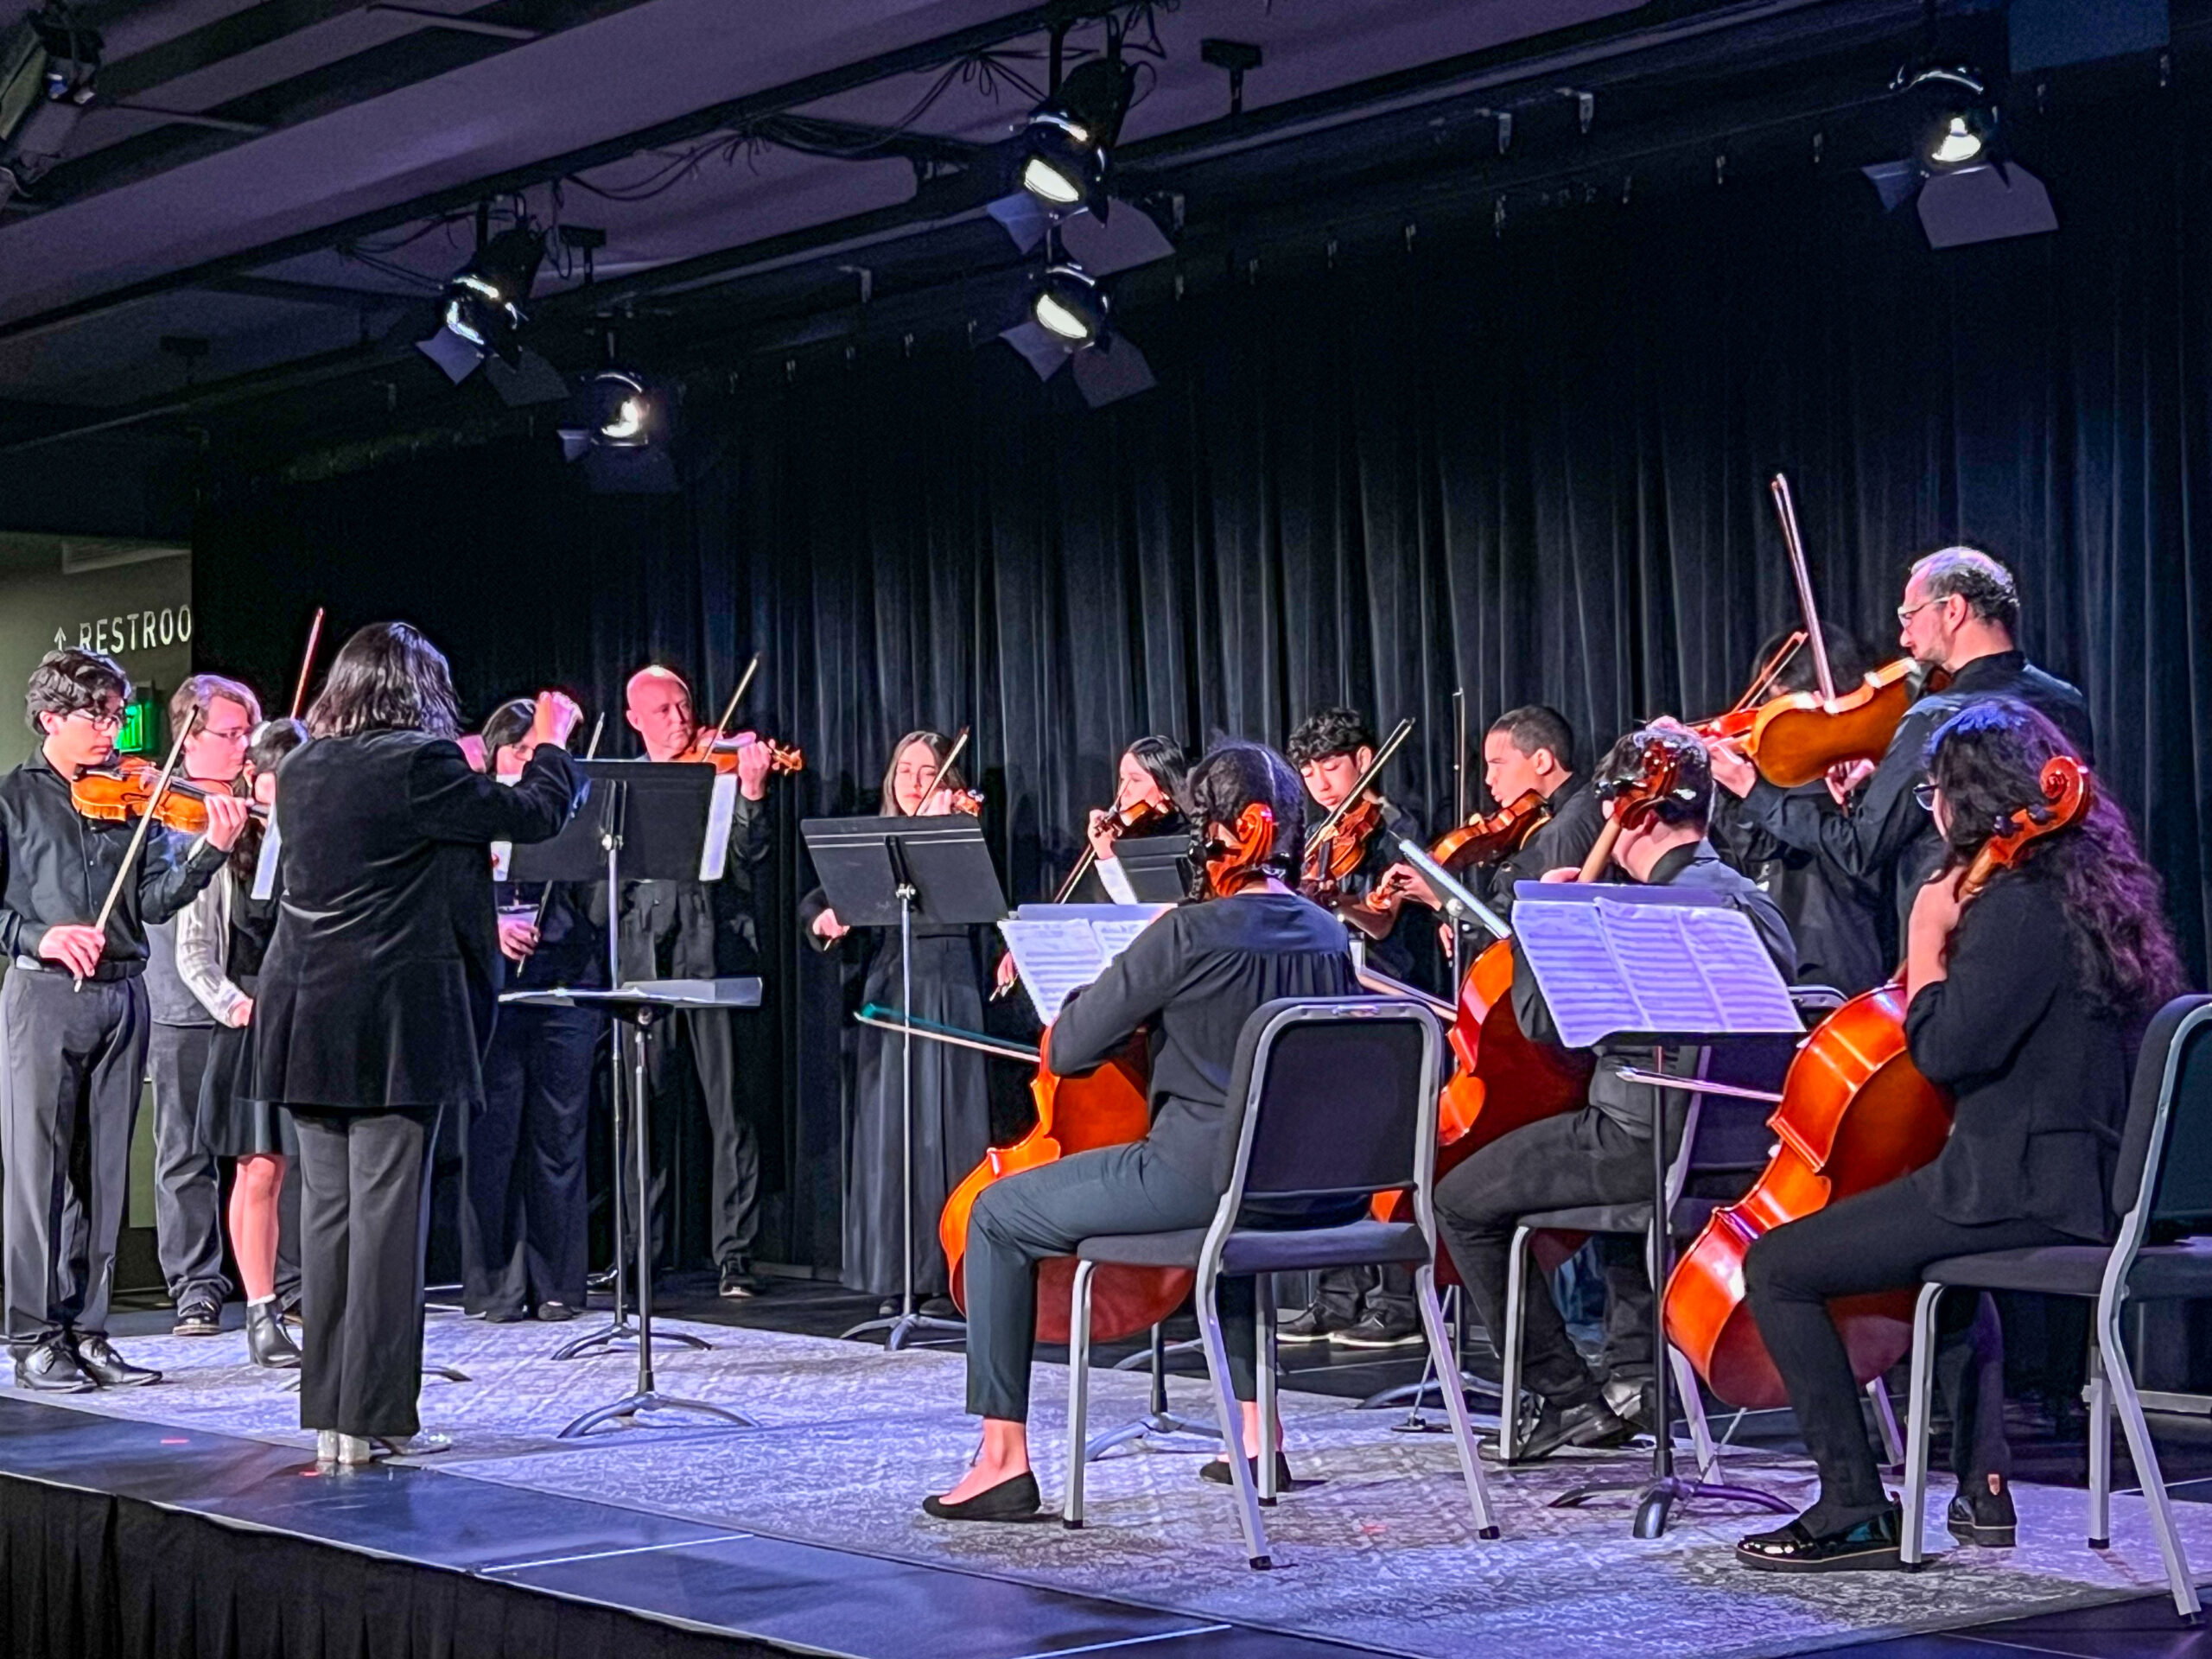 Orquesta Northwest Empowers Latinx Youth Through Free Music Classes